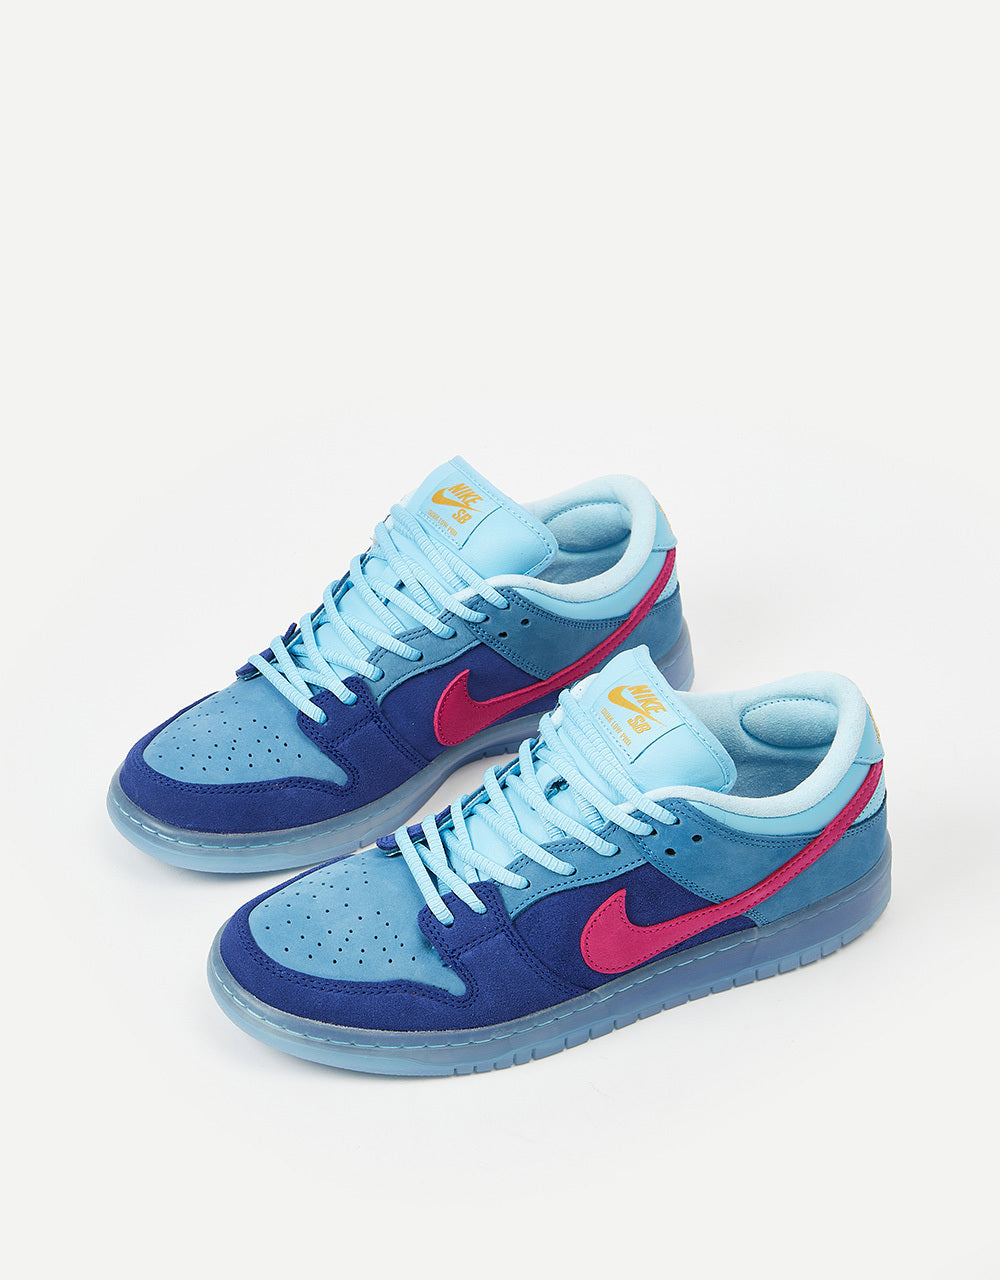 Nike SB 'Run the Jewels' Dunk Low Pro QS Skate Shoes - Deep Royal Blue